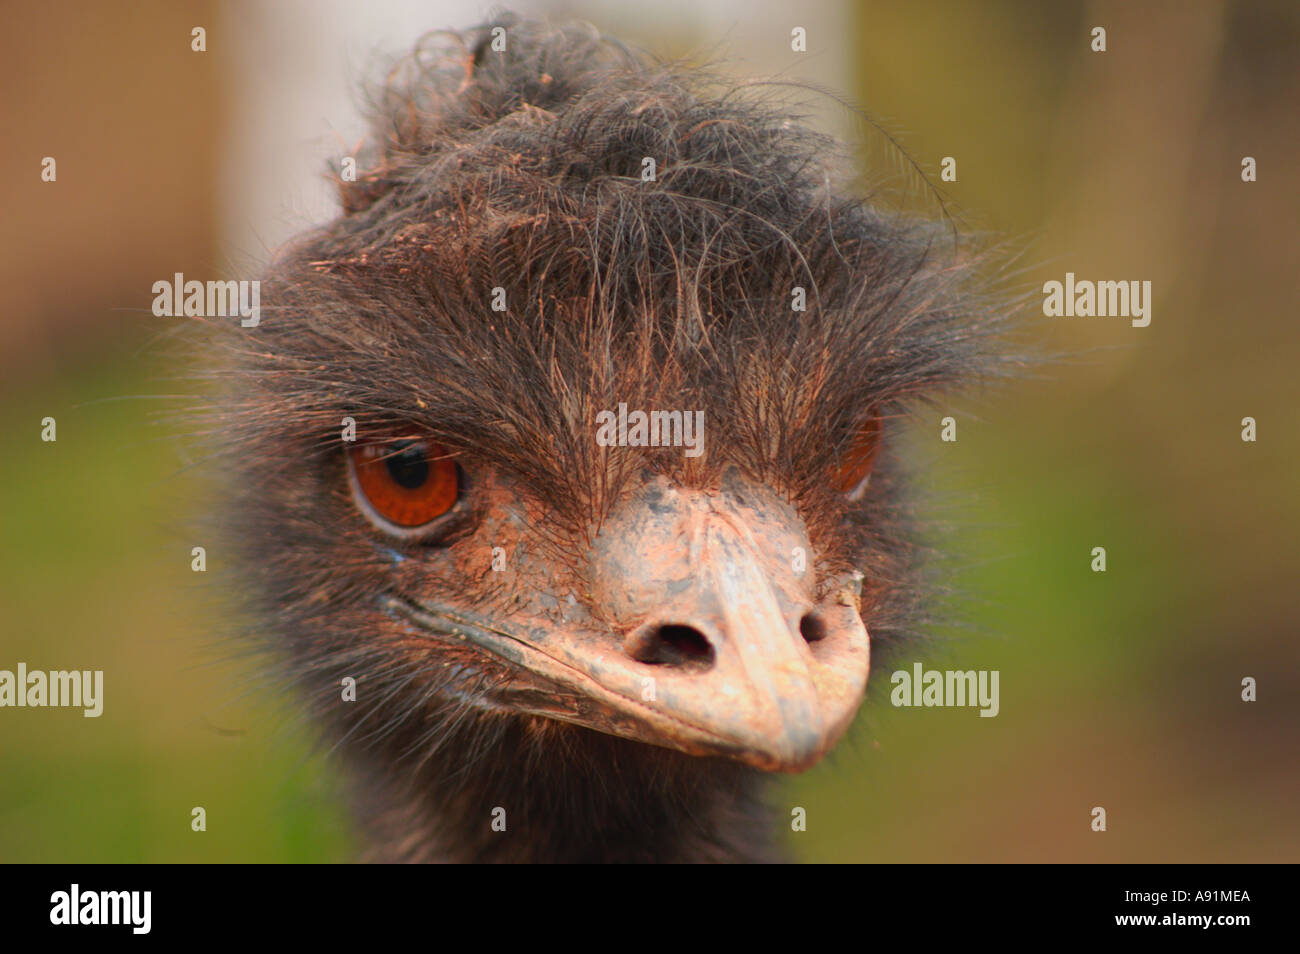 EMU S HEAD  Stock Photo